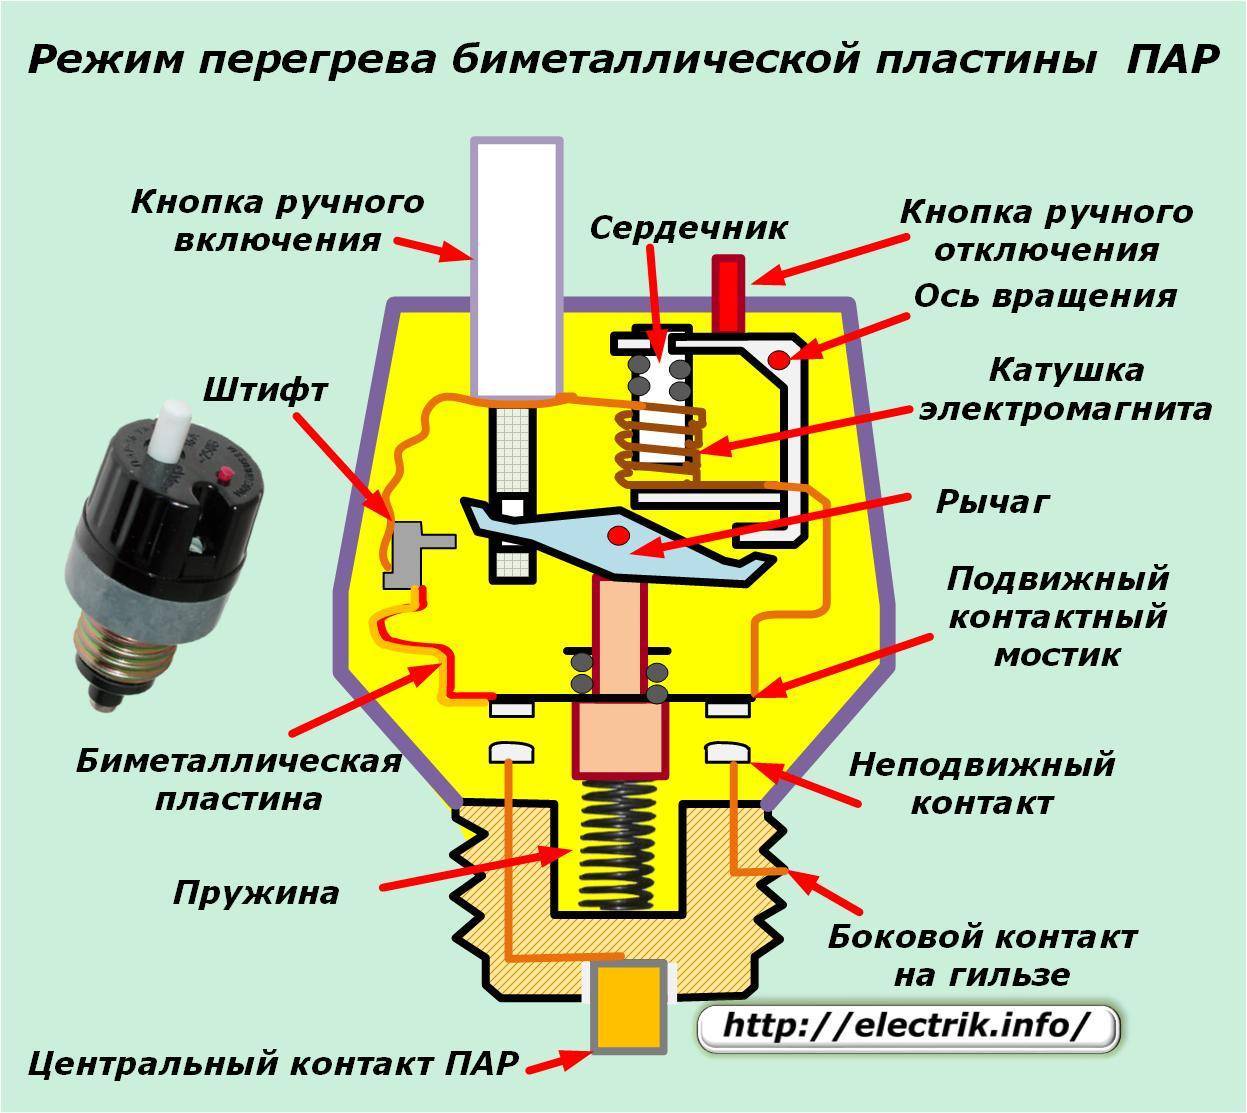 Устройство и технические характеристики электрического автомата